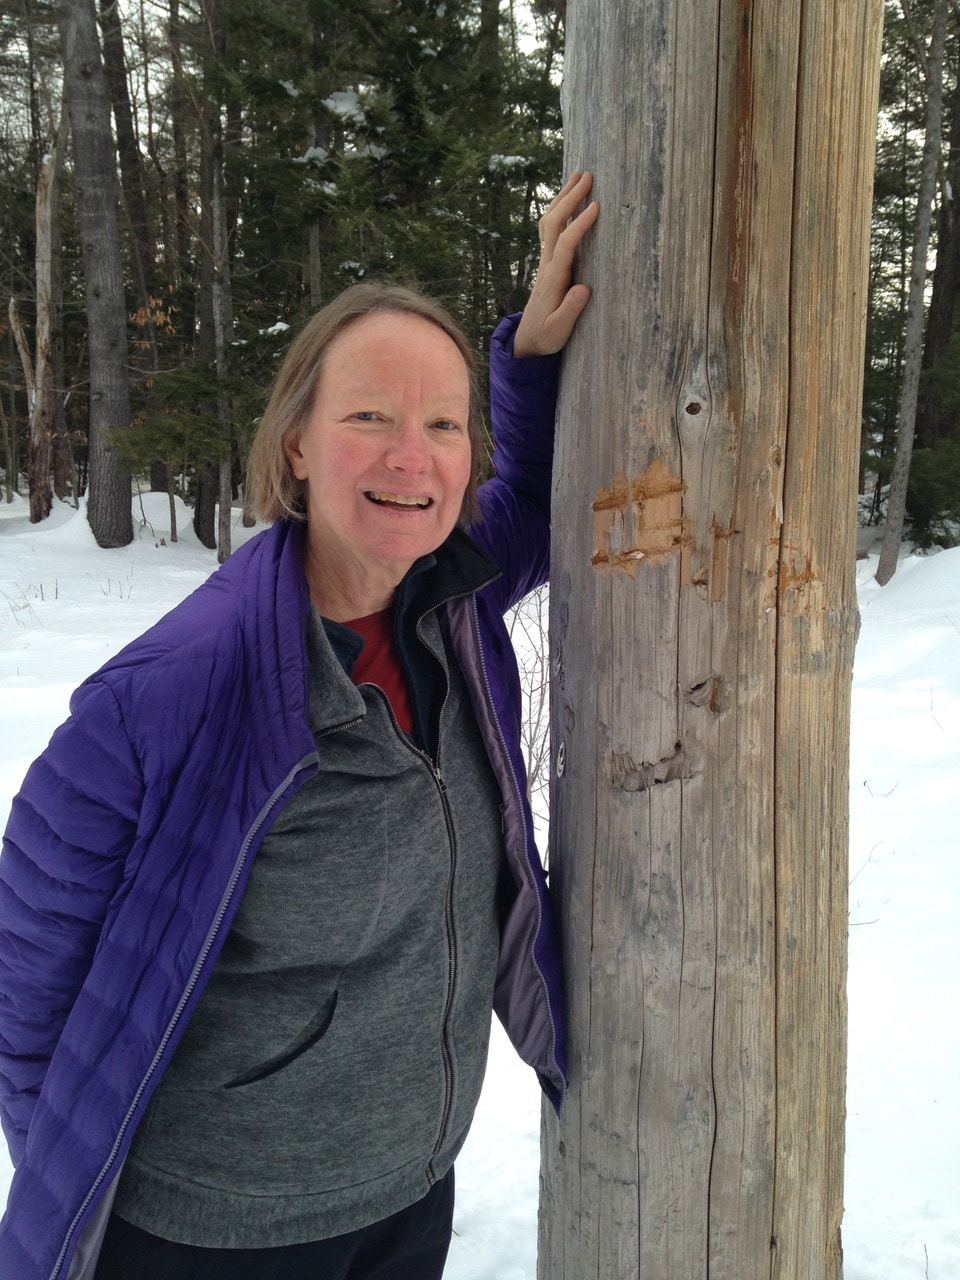 Janet Altobello, next to a bear-bitten telephone pole